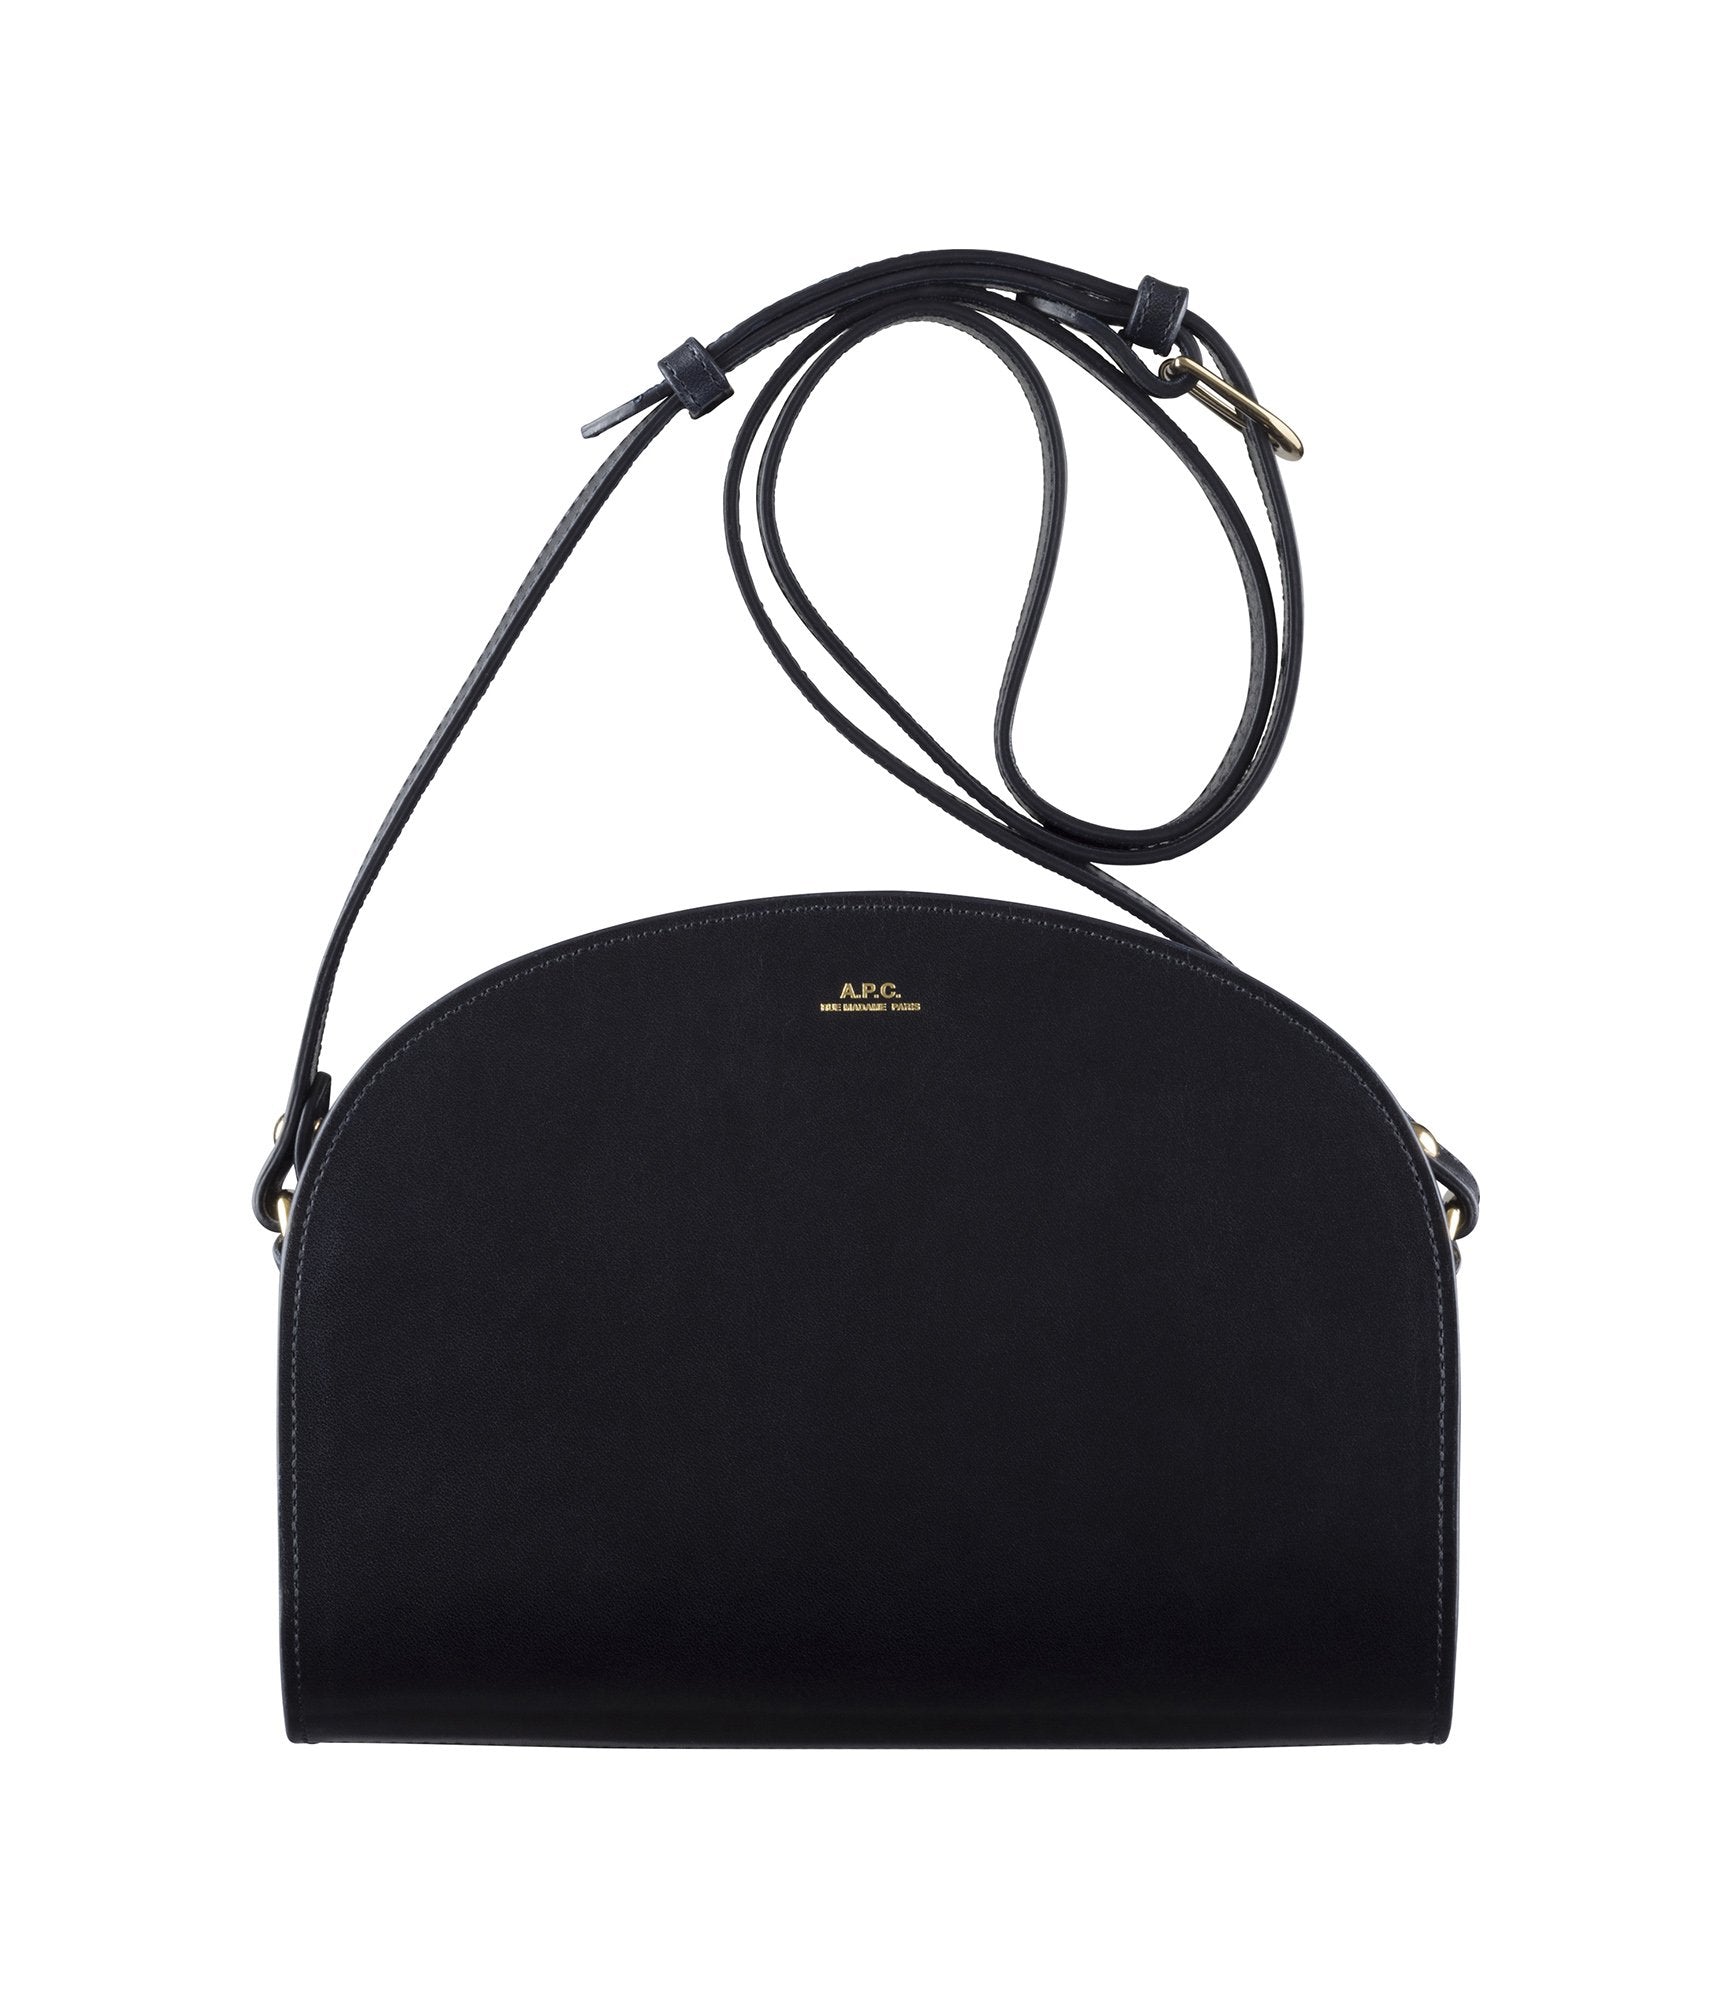 Hermès Black Leather Aline Mini Bag